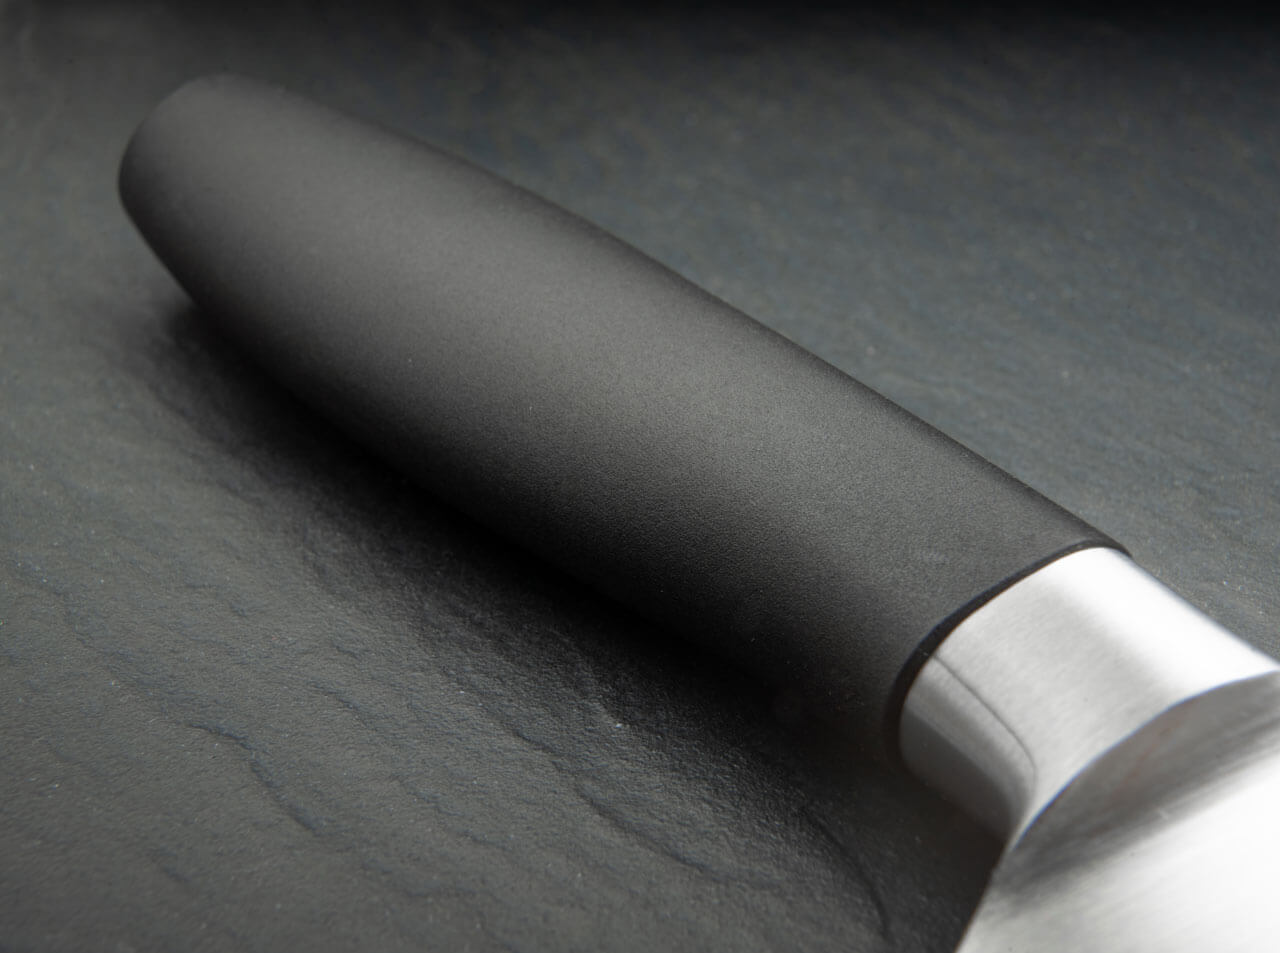 Chef's Small Knife – Professional Secrets